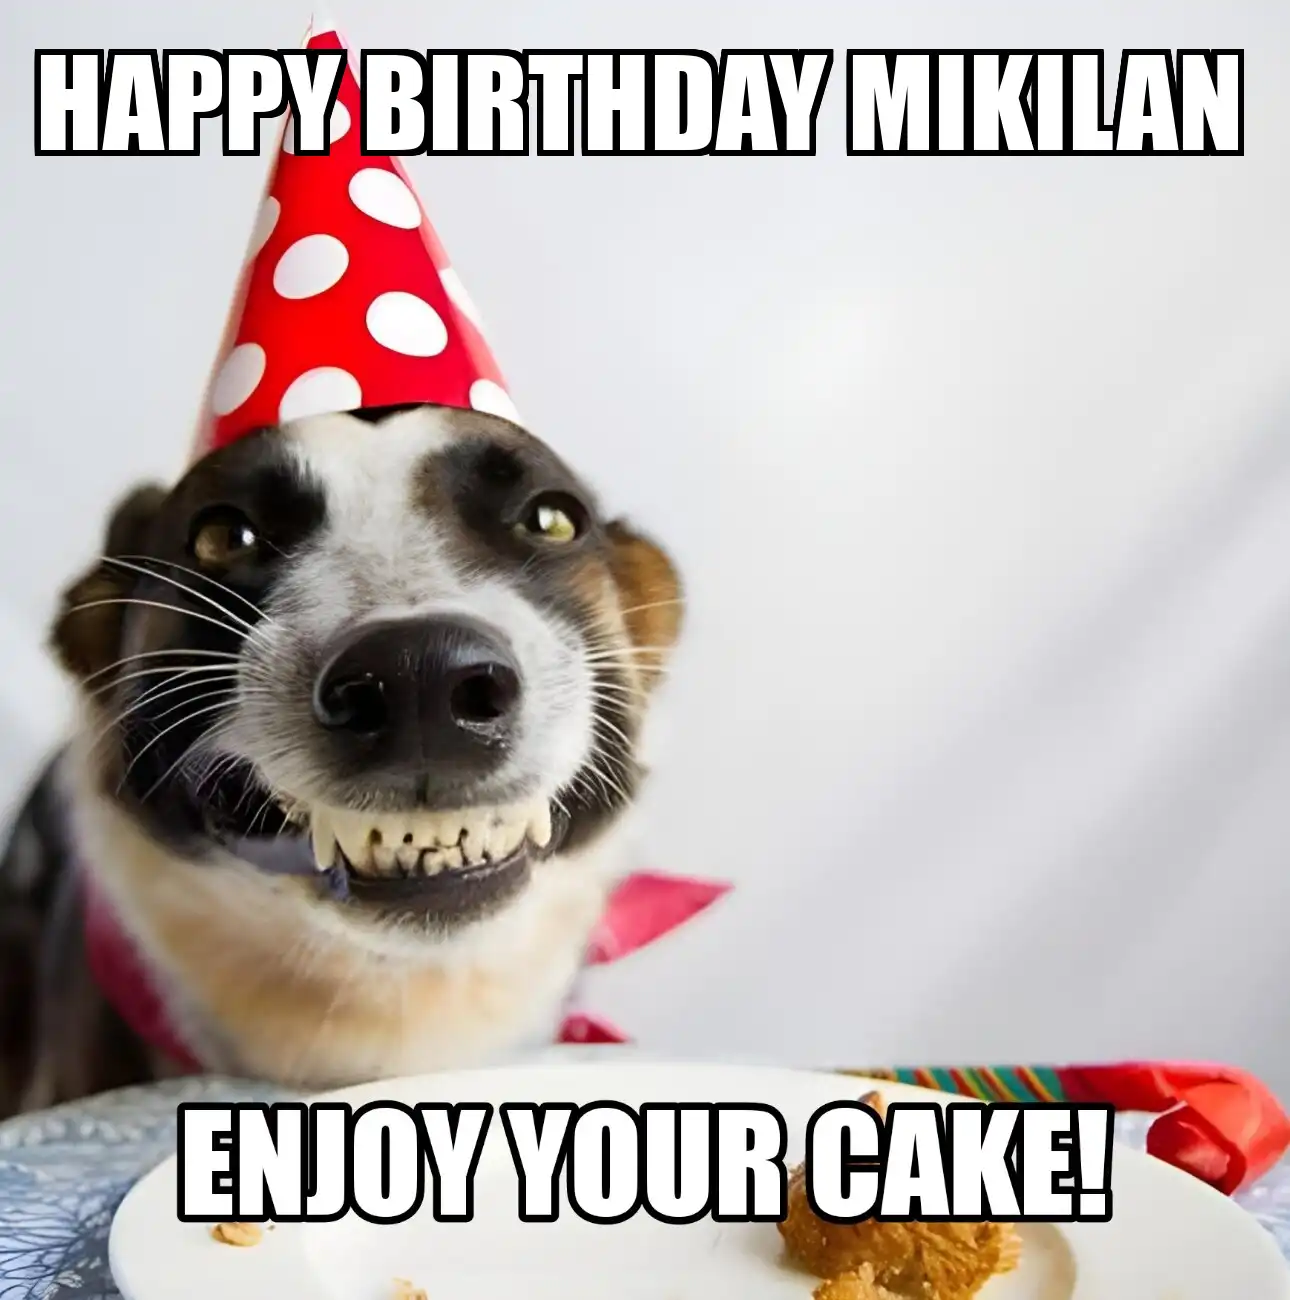 Happy Birthday Mikilan Enjoy Your Cake Dog Meme